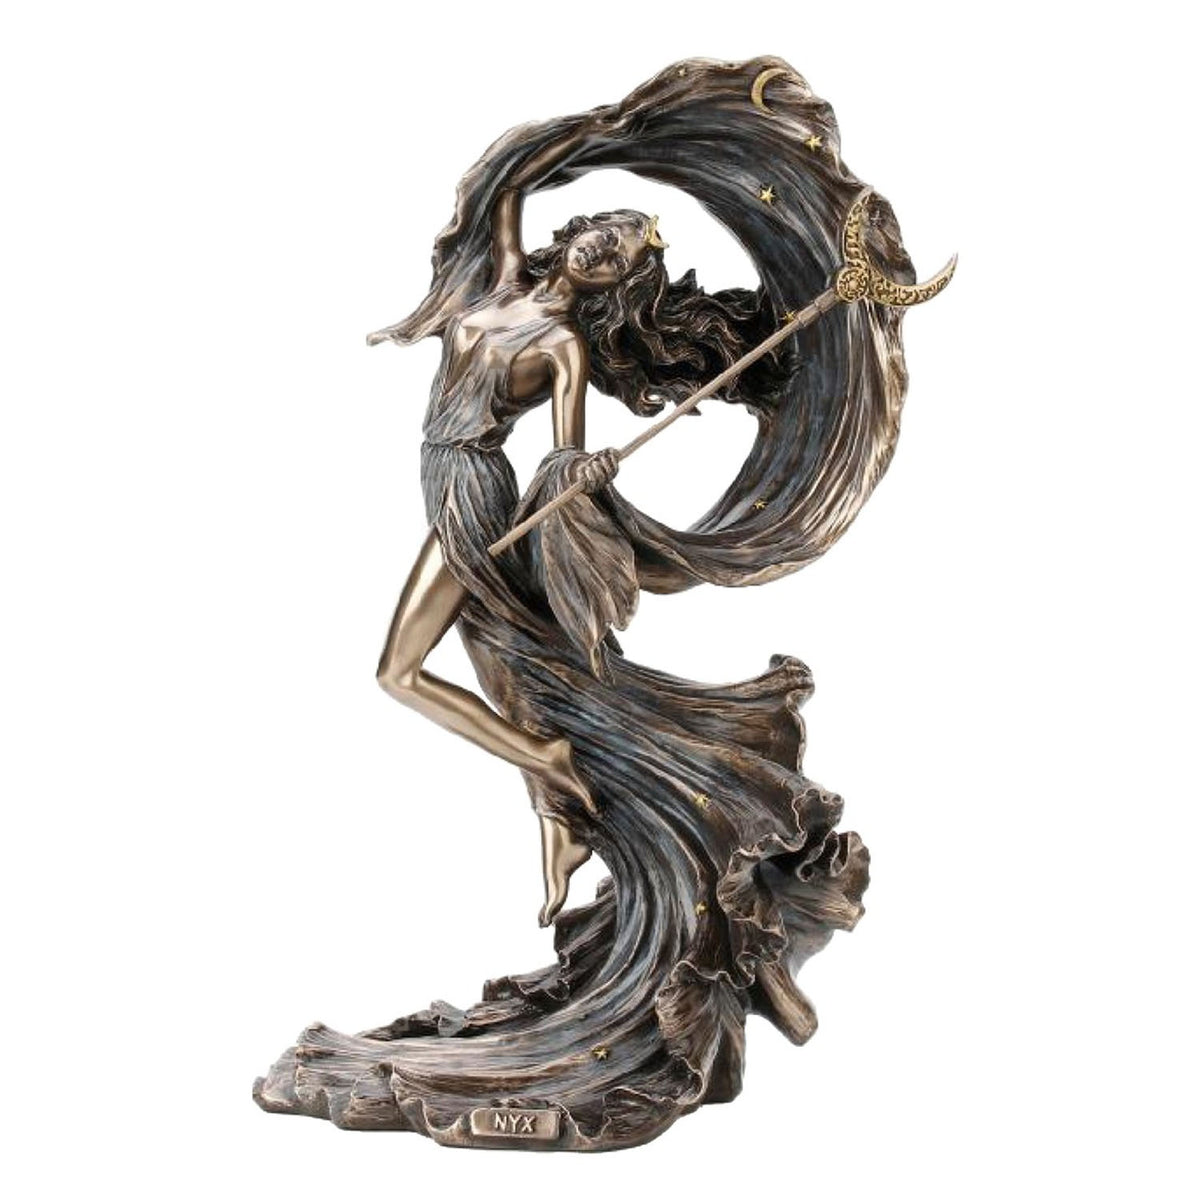 NYX - Goddess of the Night Bronze Figurine - Notbrand